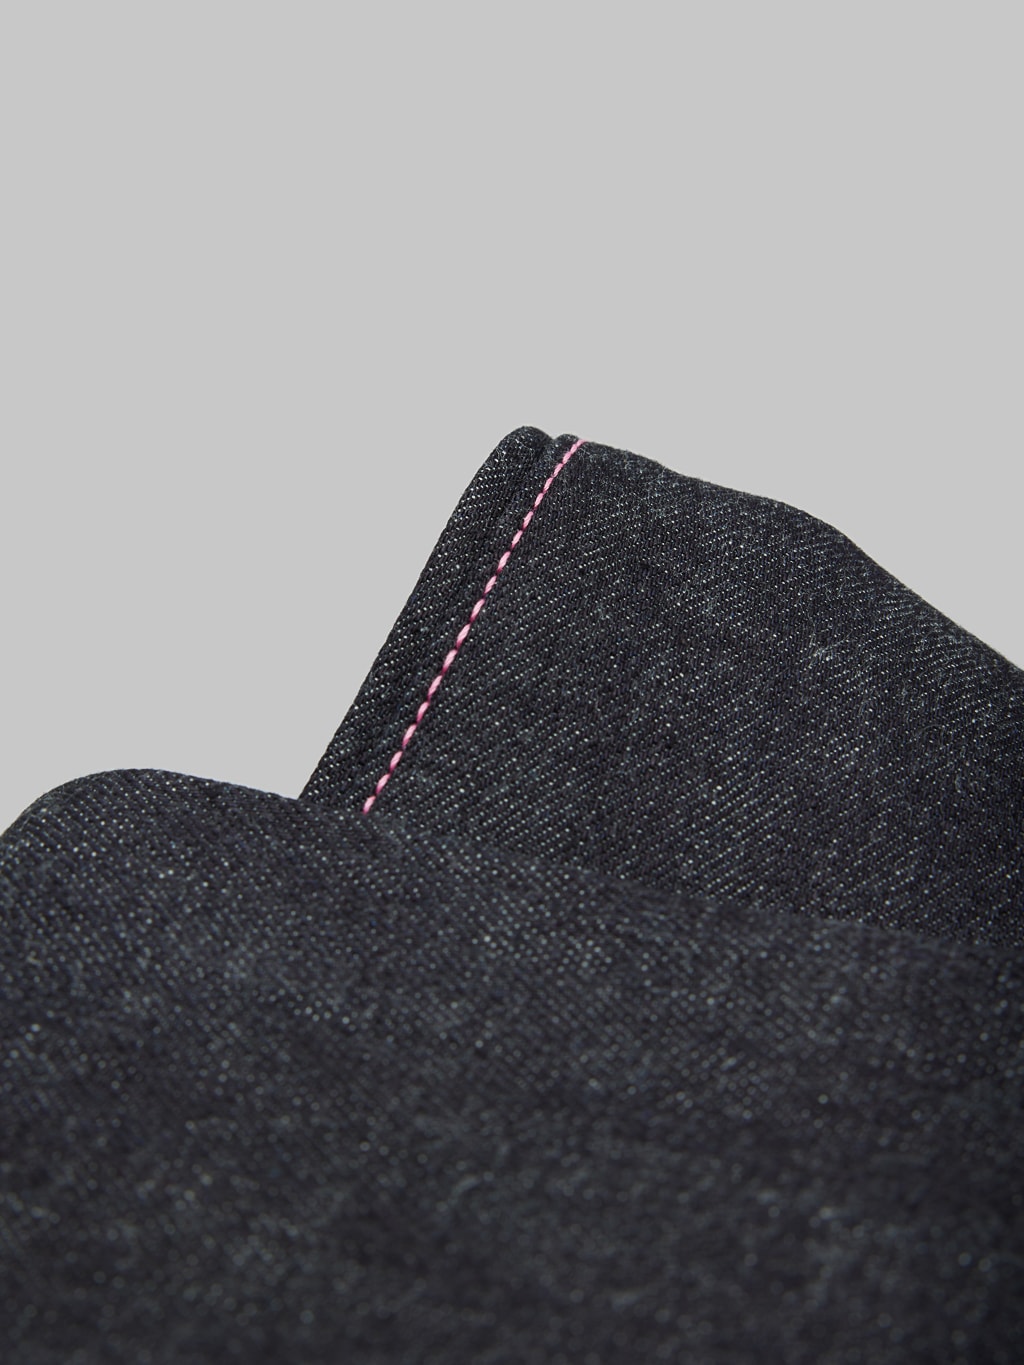 momotaro jeans 0306 12 12oz selvedge denim tight tapered 100 cotton